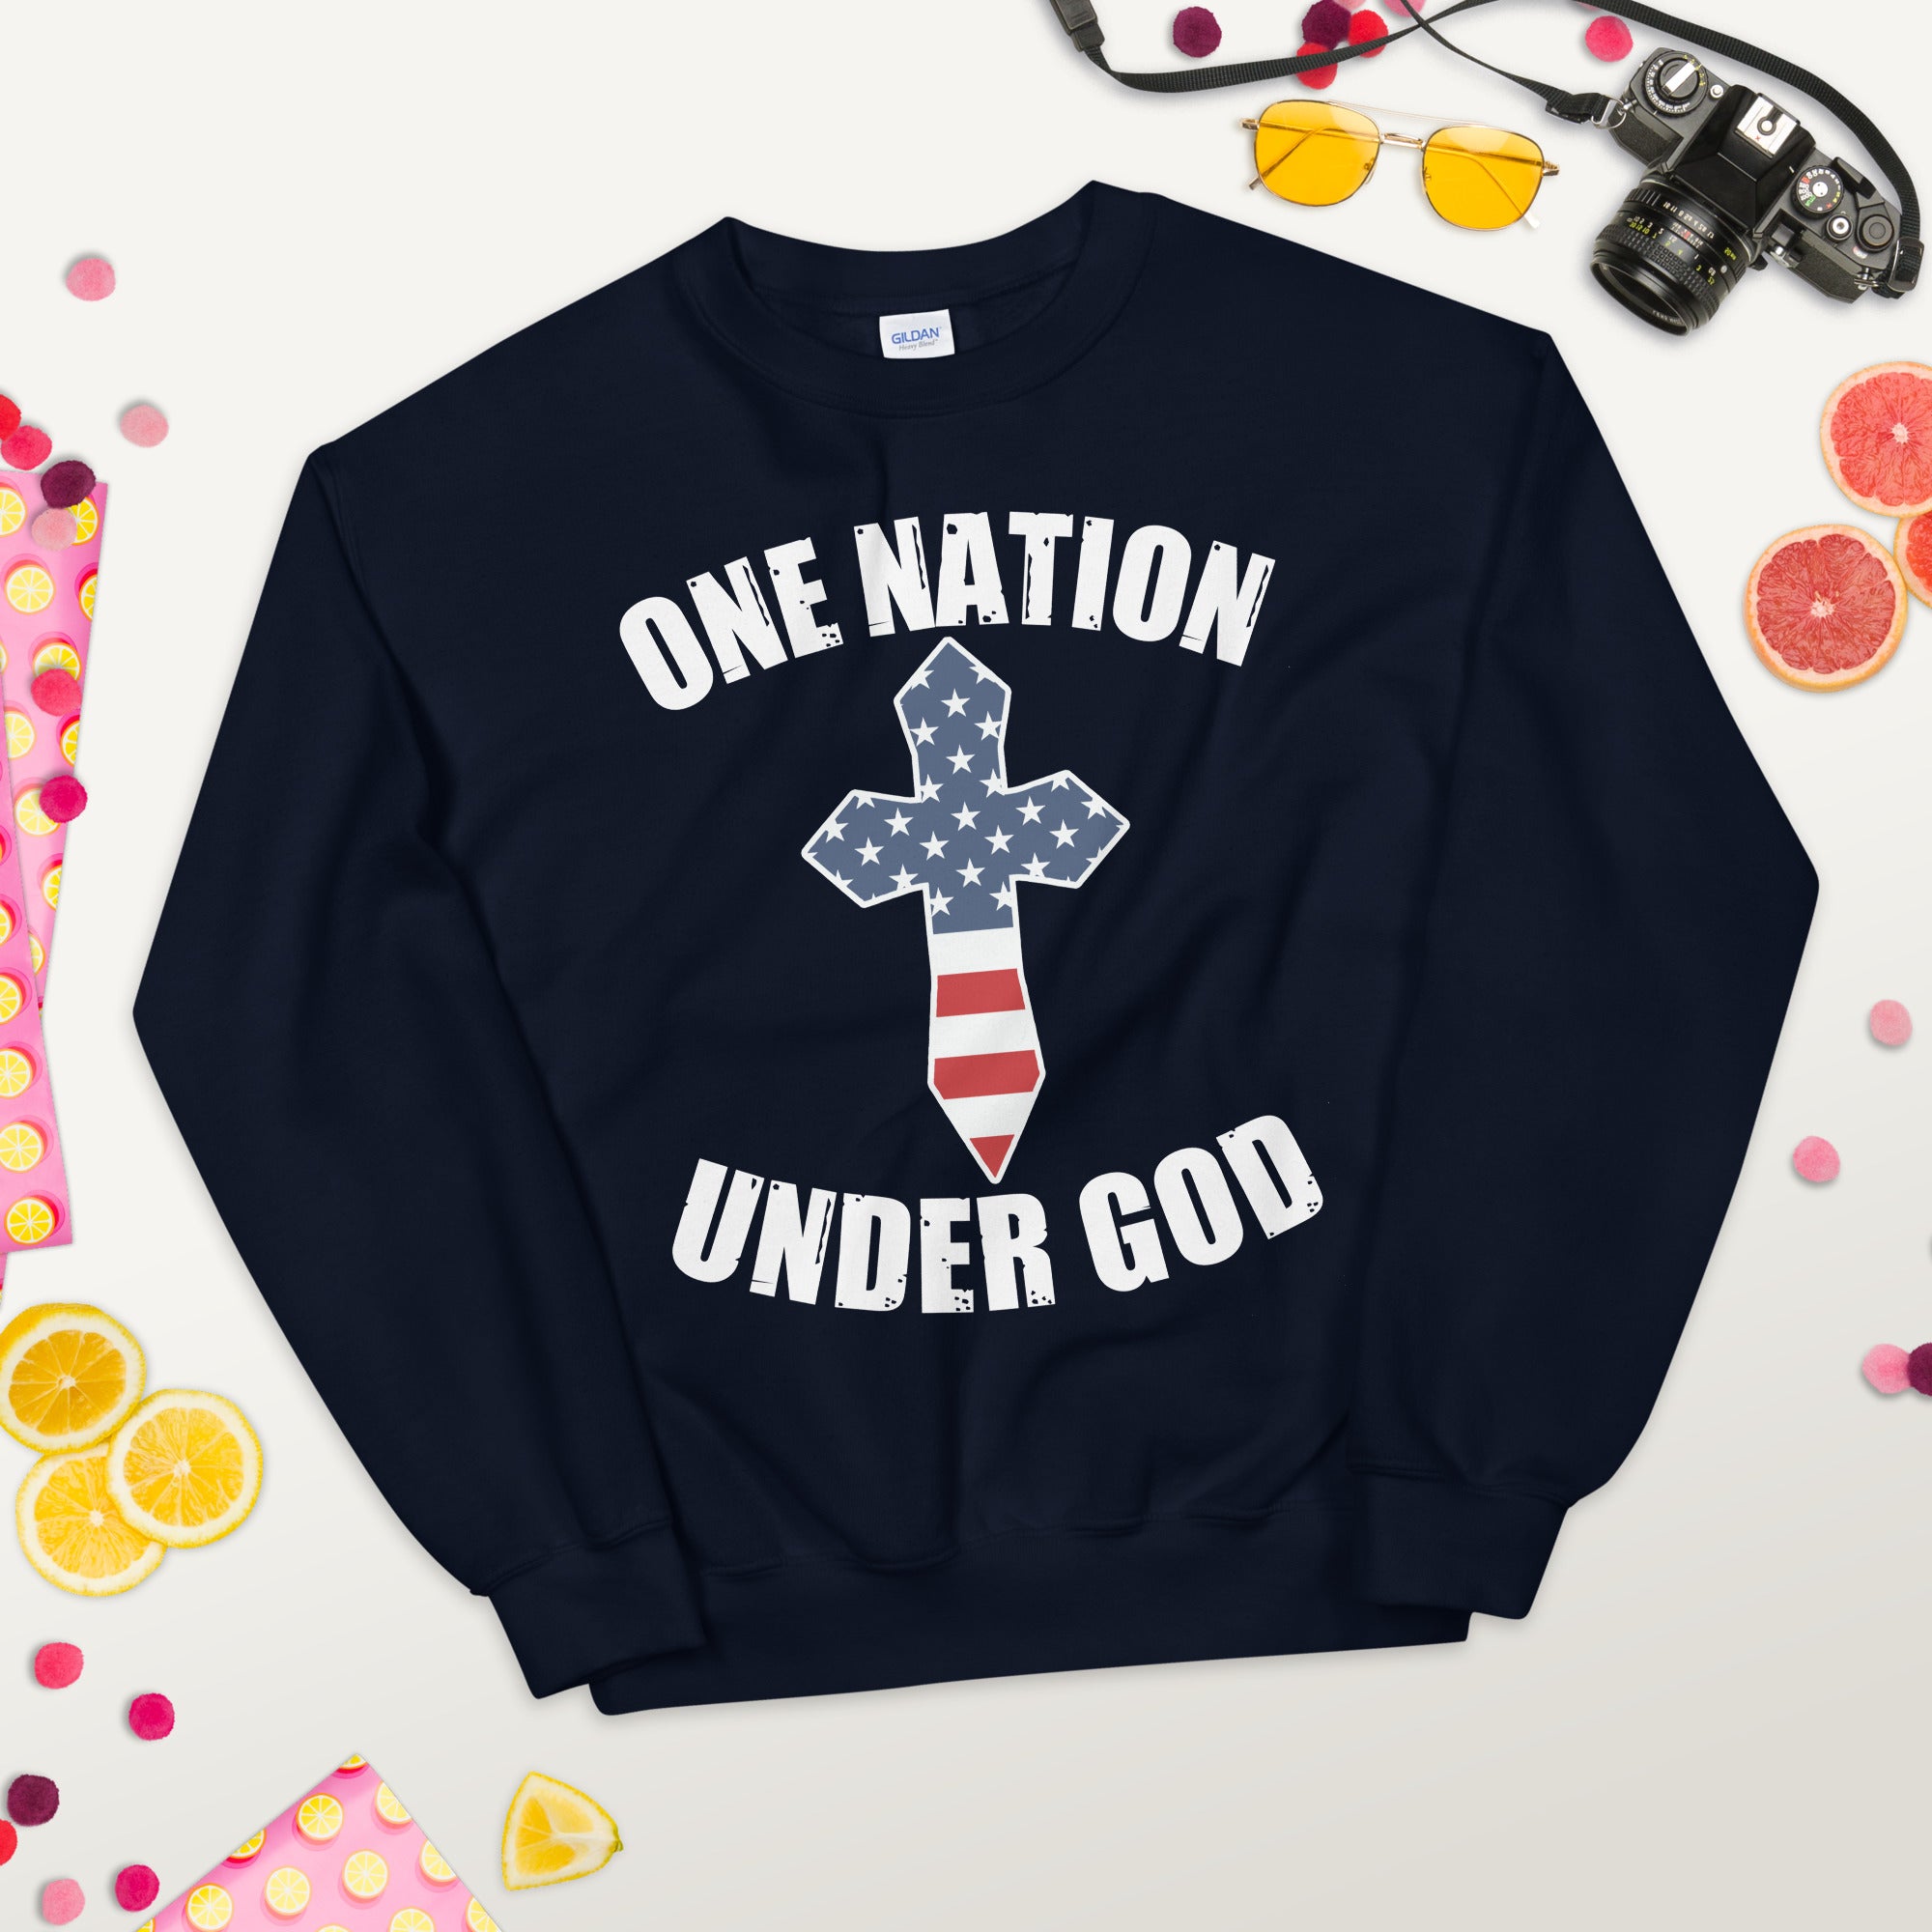 One Nation Under God Sweatshirt, Patriotic Gift, Freedom Sweater, Pledge of Allegiance, USA American Patriot Shirt, US Flag, Proud American